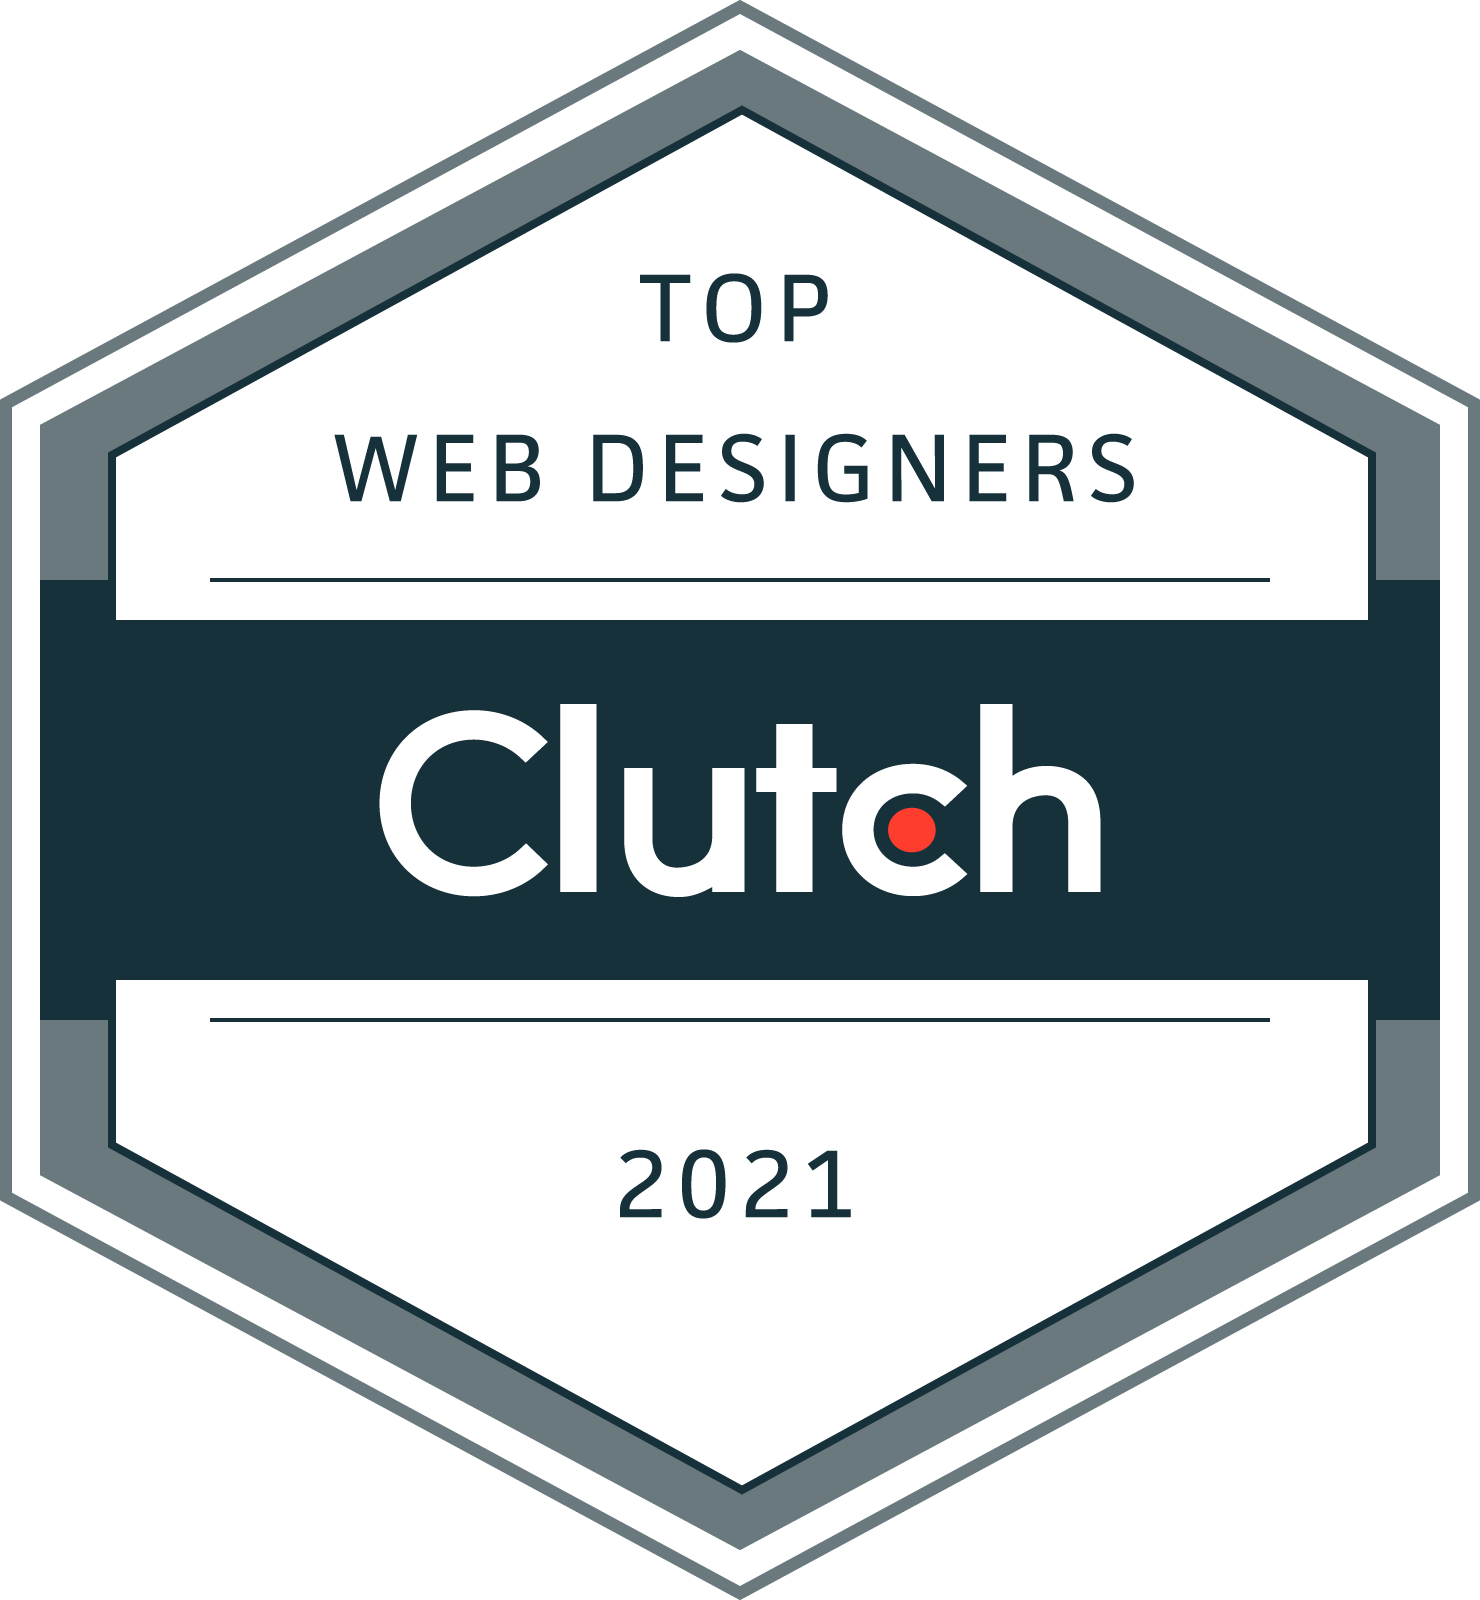 Juuced_Marketing_Clutch_Top_Web_Designer